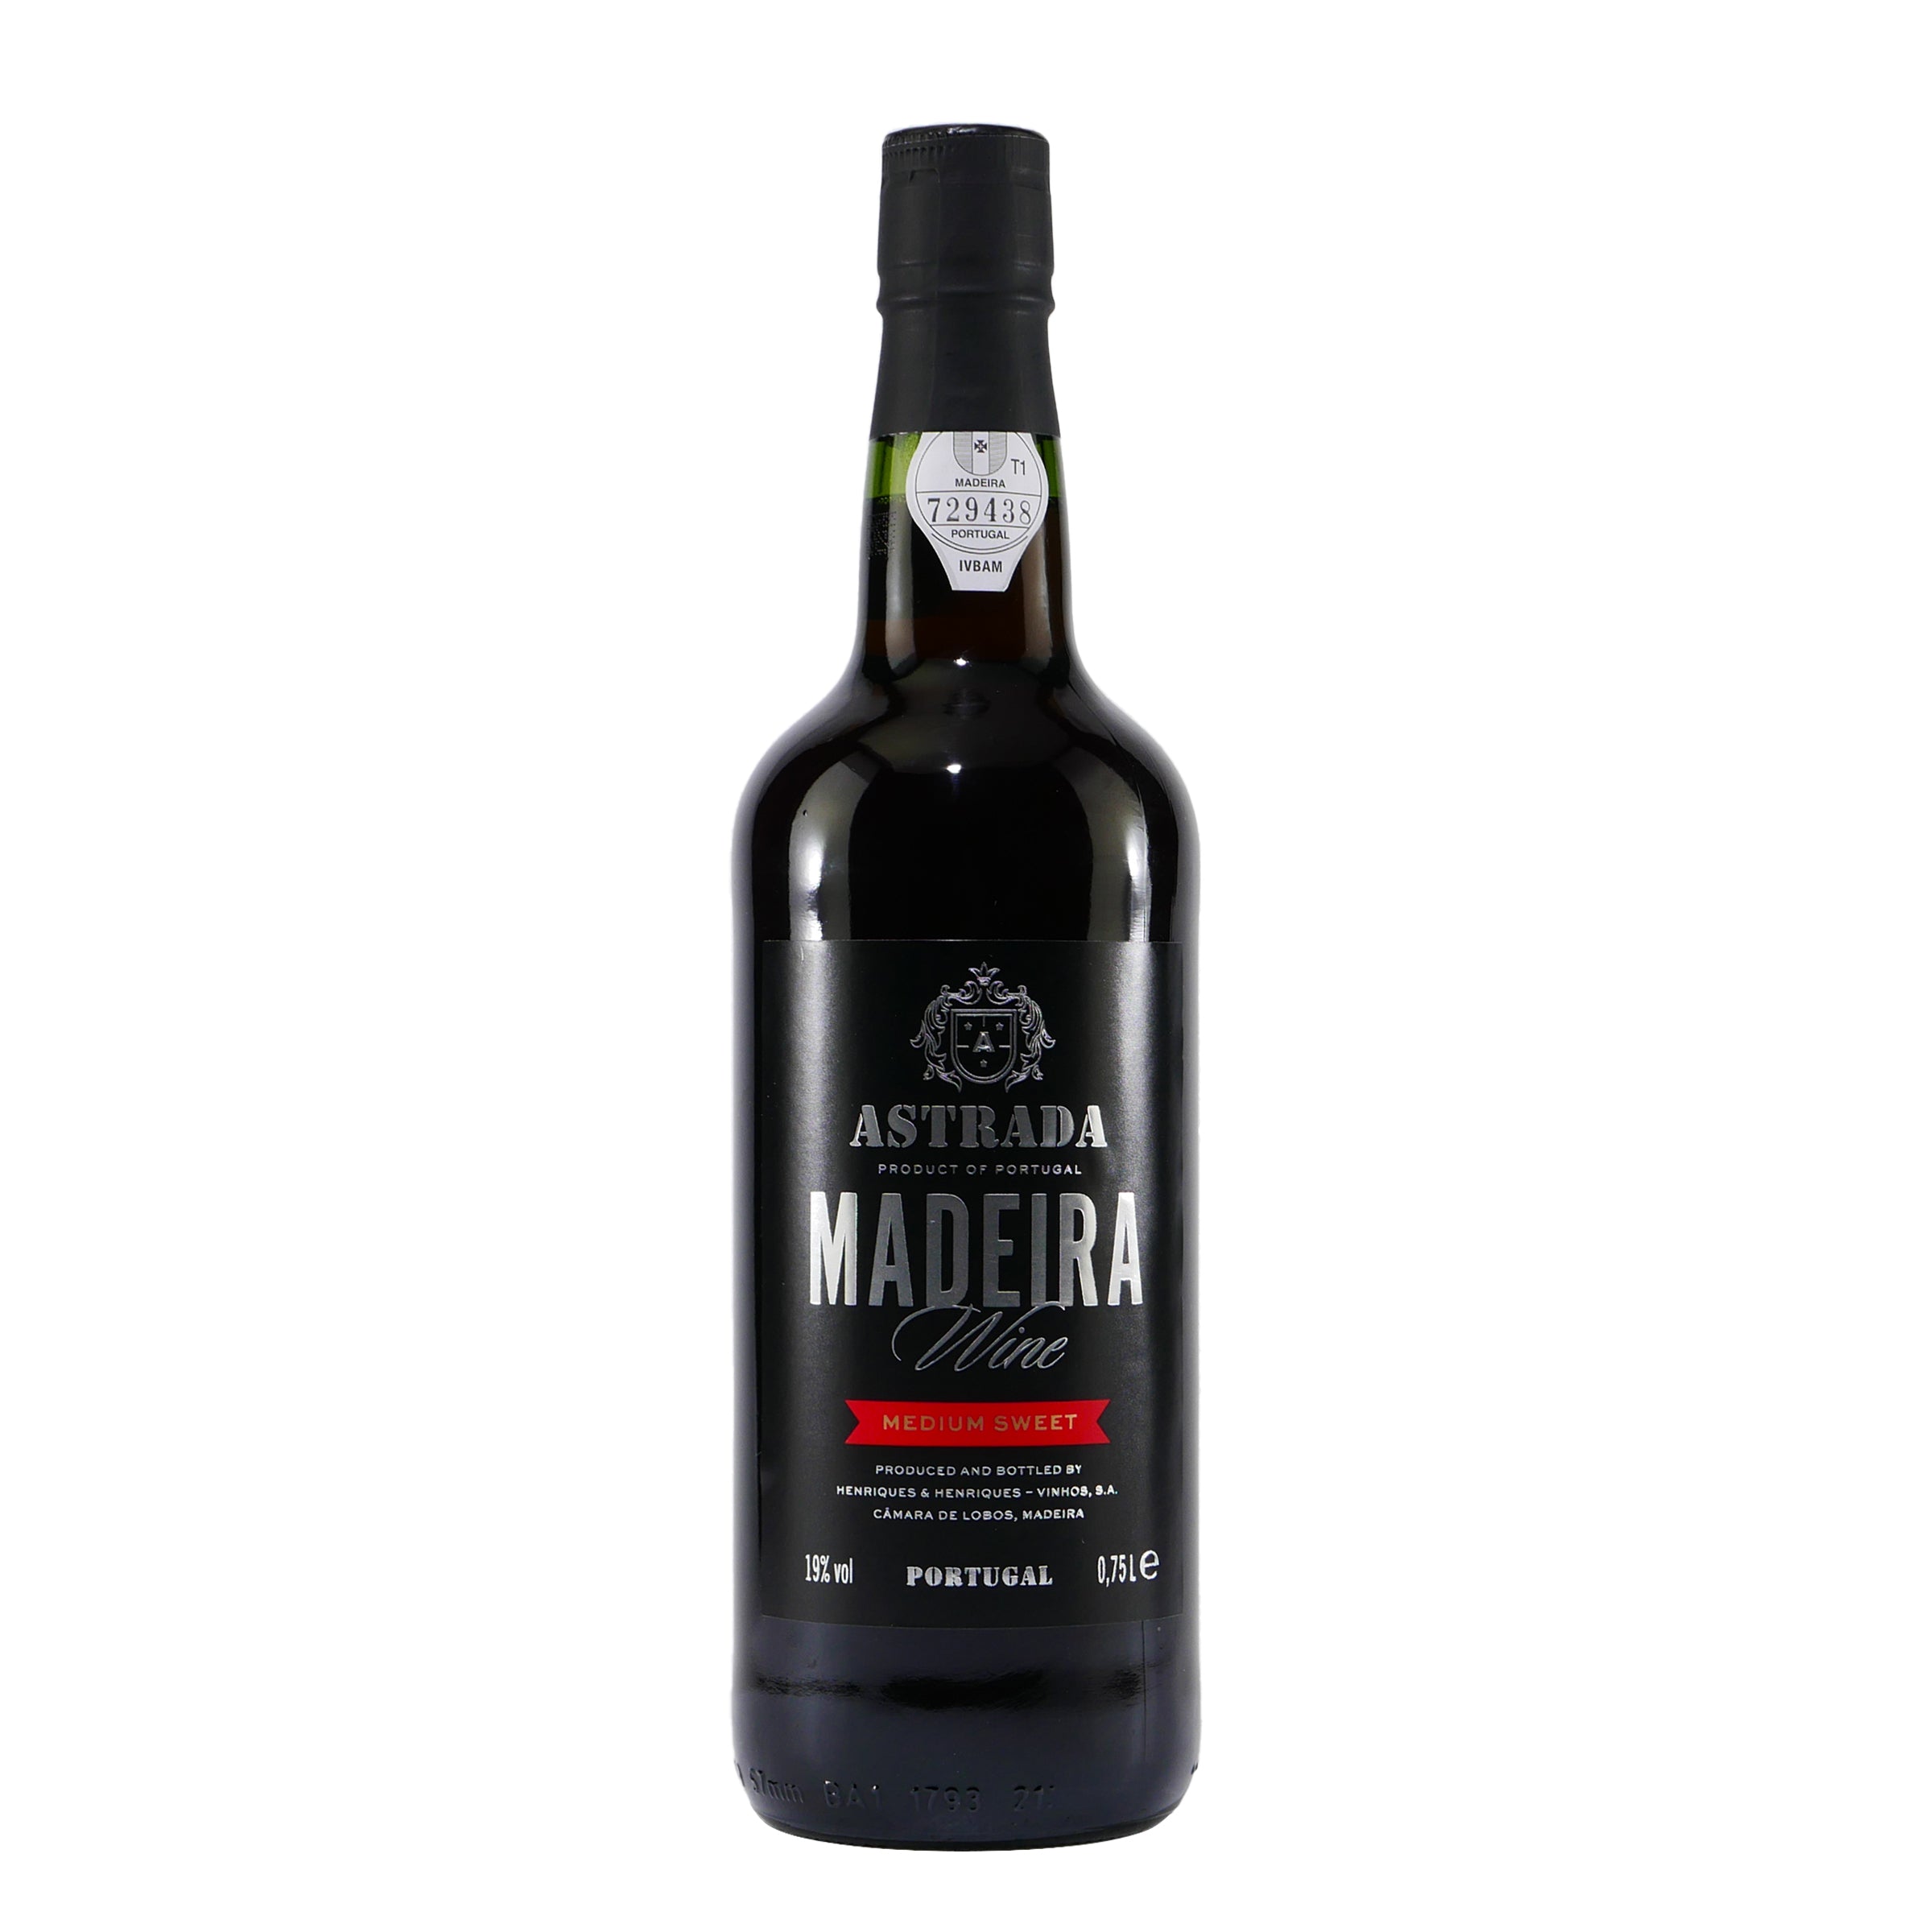 Astrada Madeira Likörwein (6 x 0,75L)